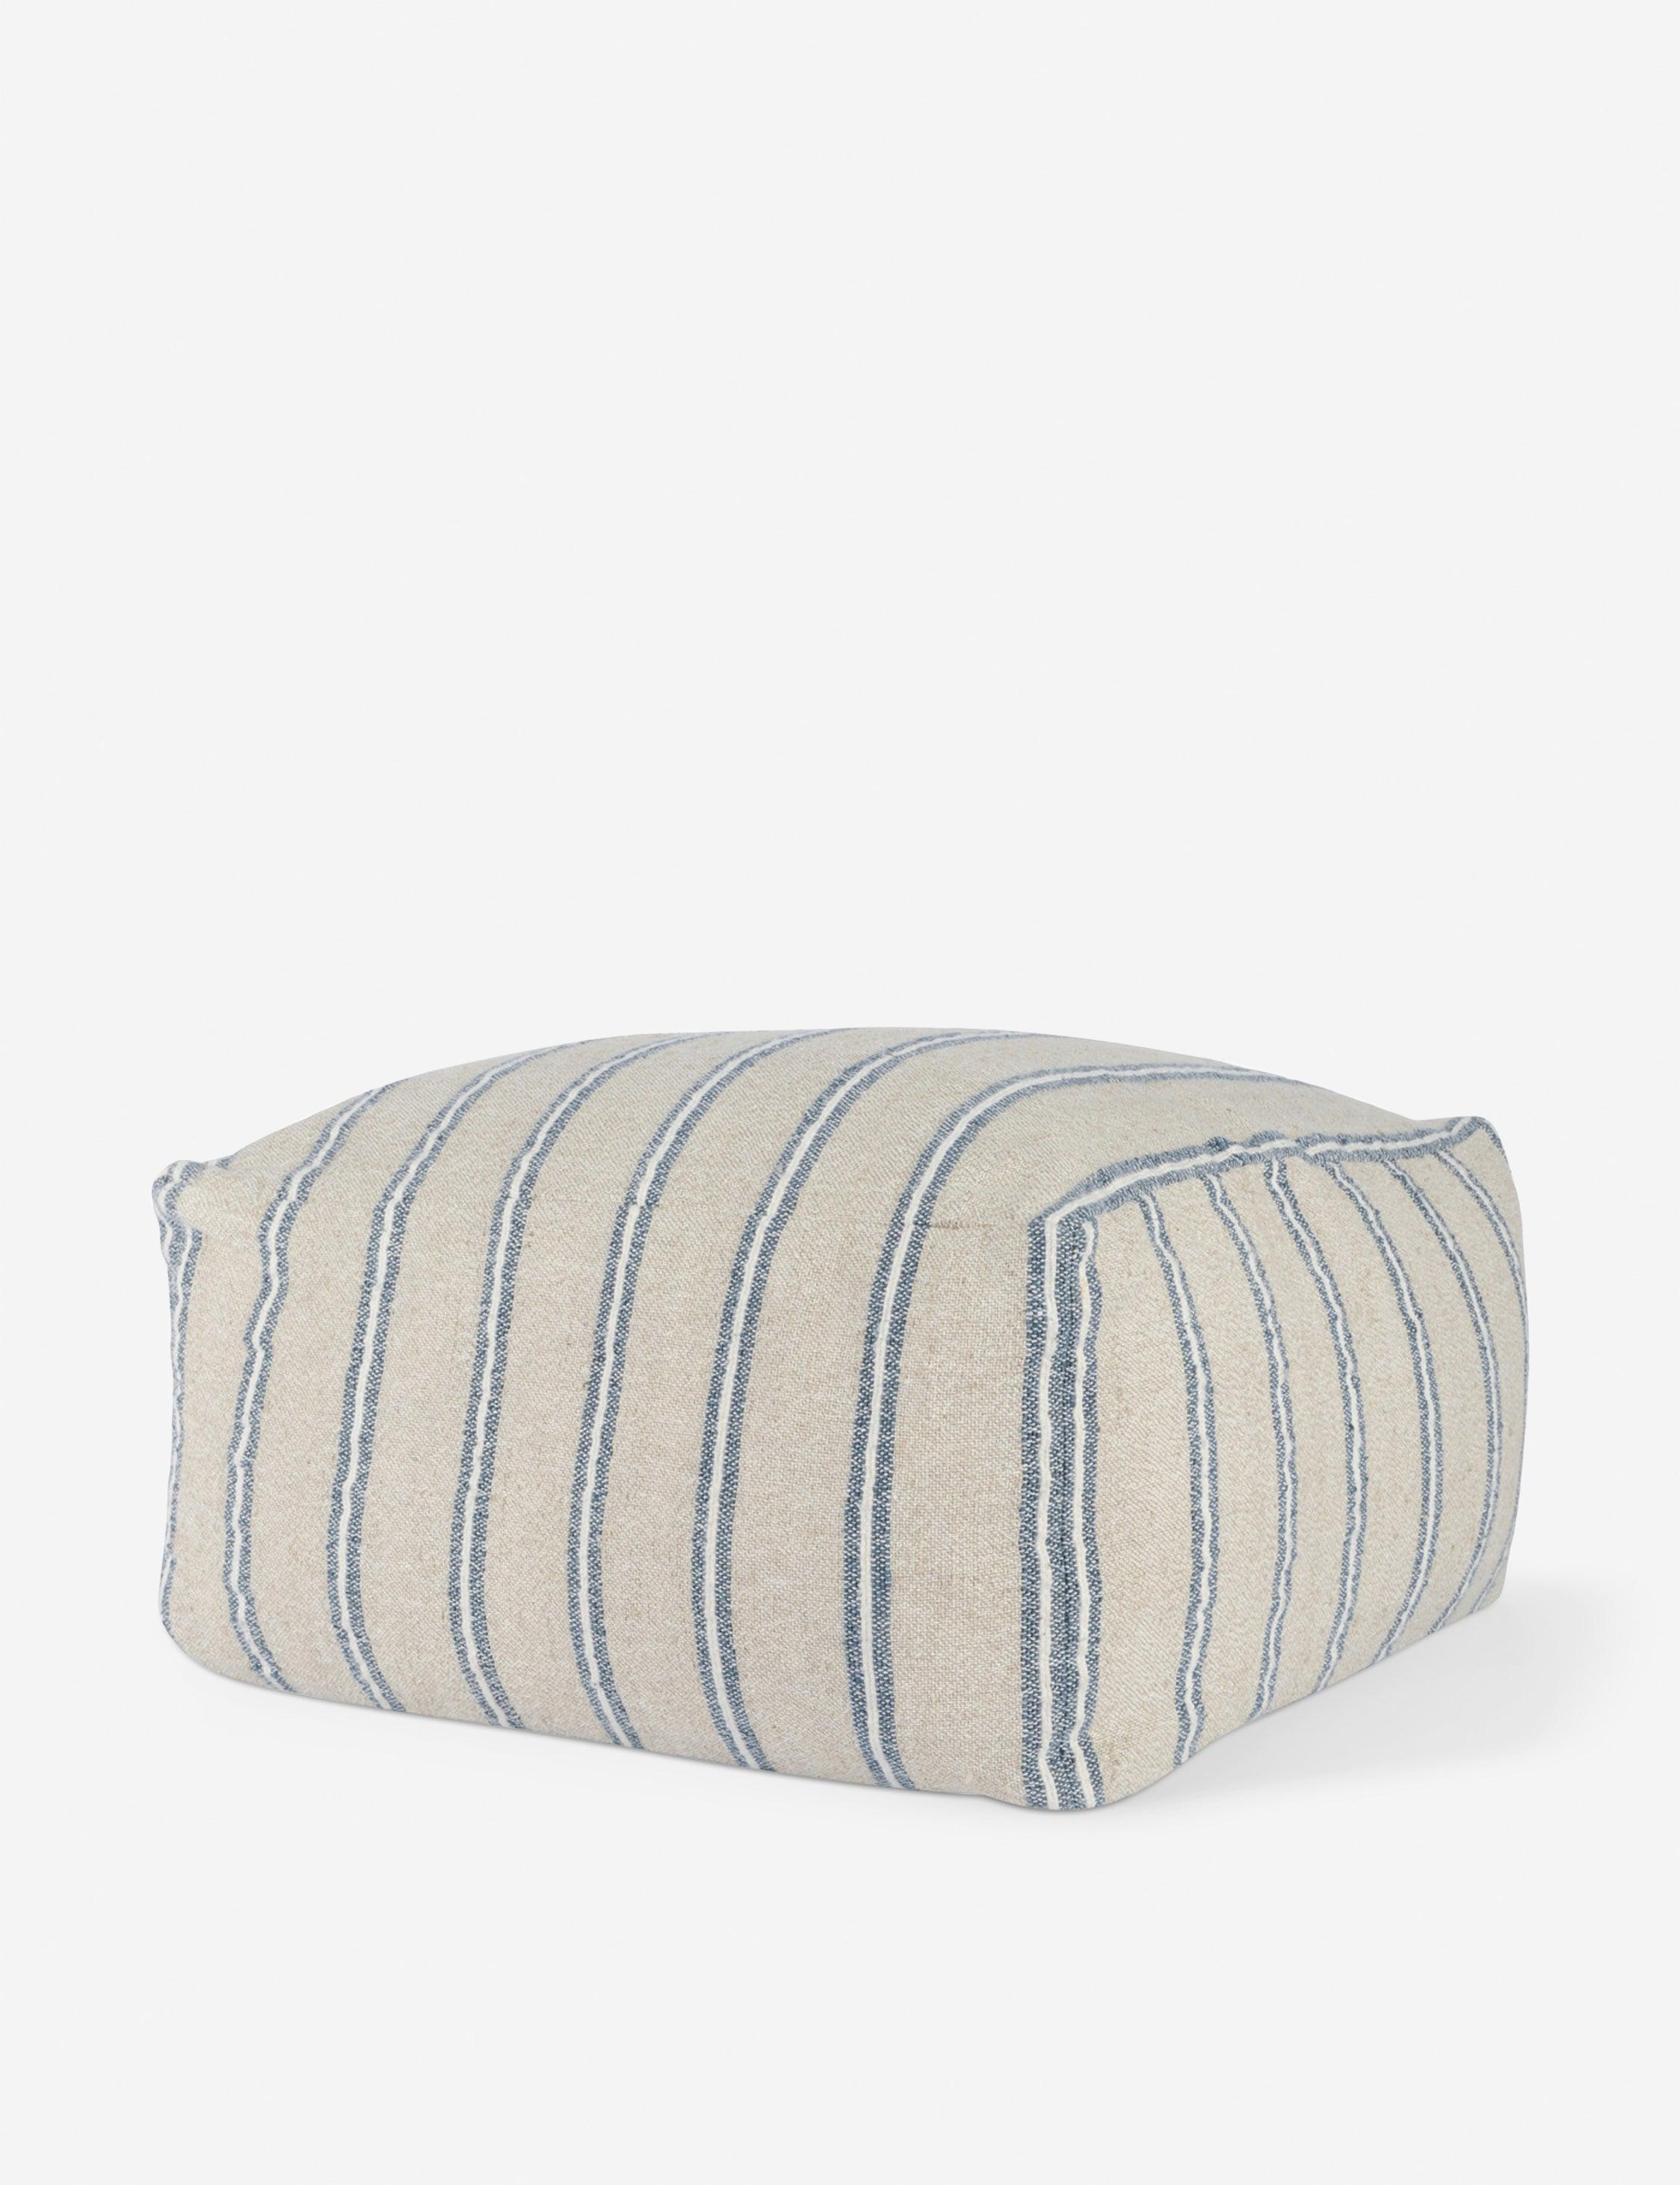 Cozy Coastal Blue-and-White Striped Linen-Cotton Pouf